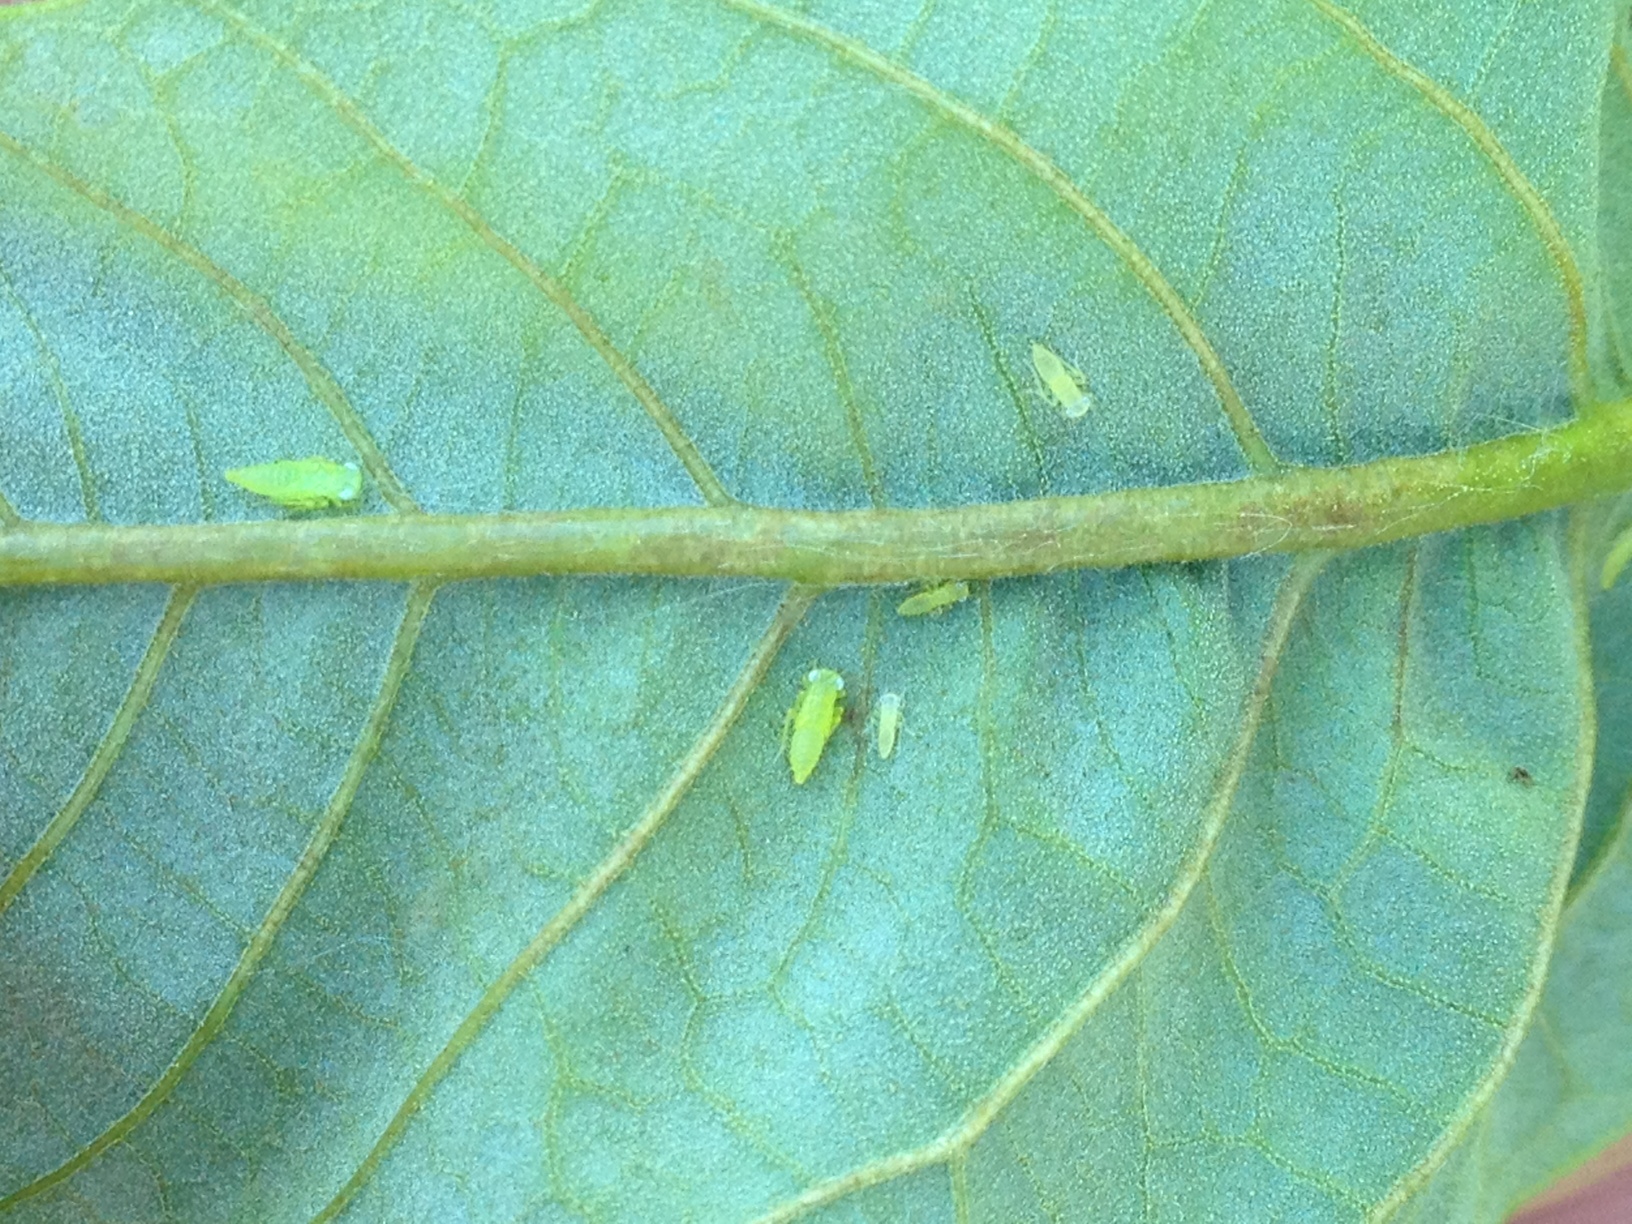 Potato leafhopper nymphs